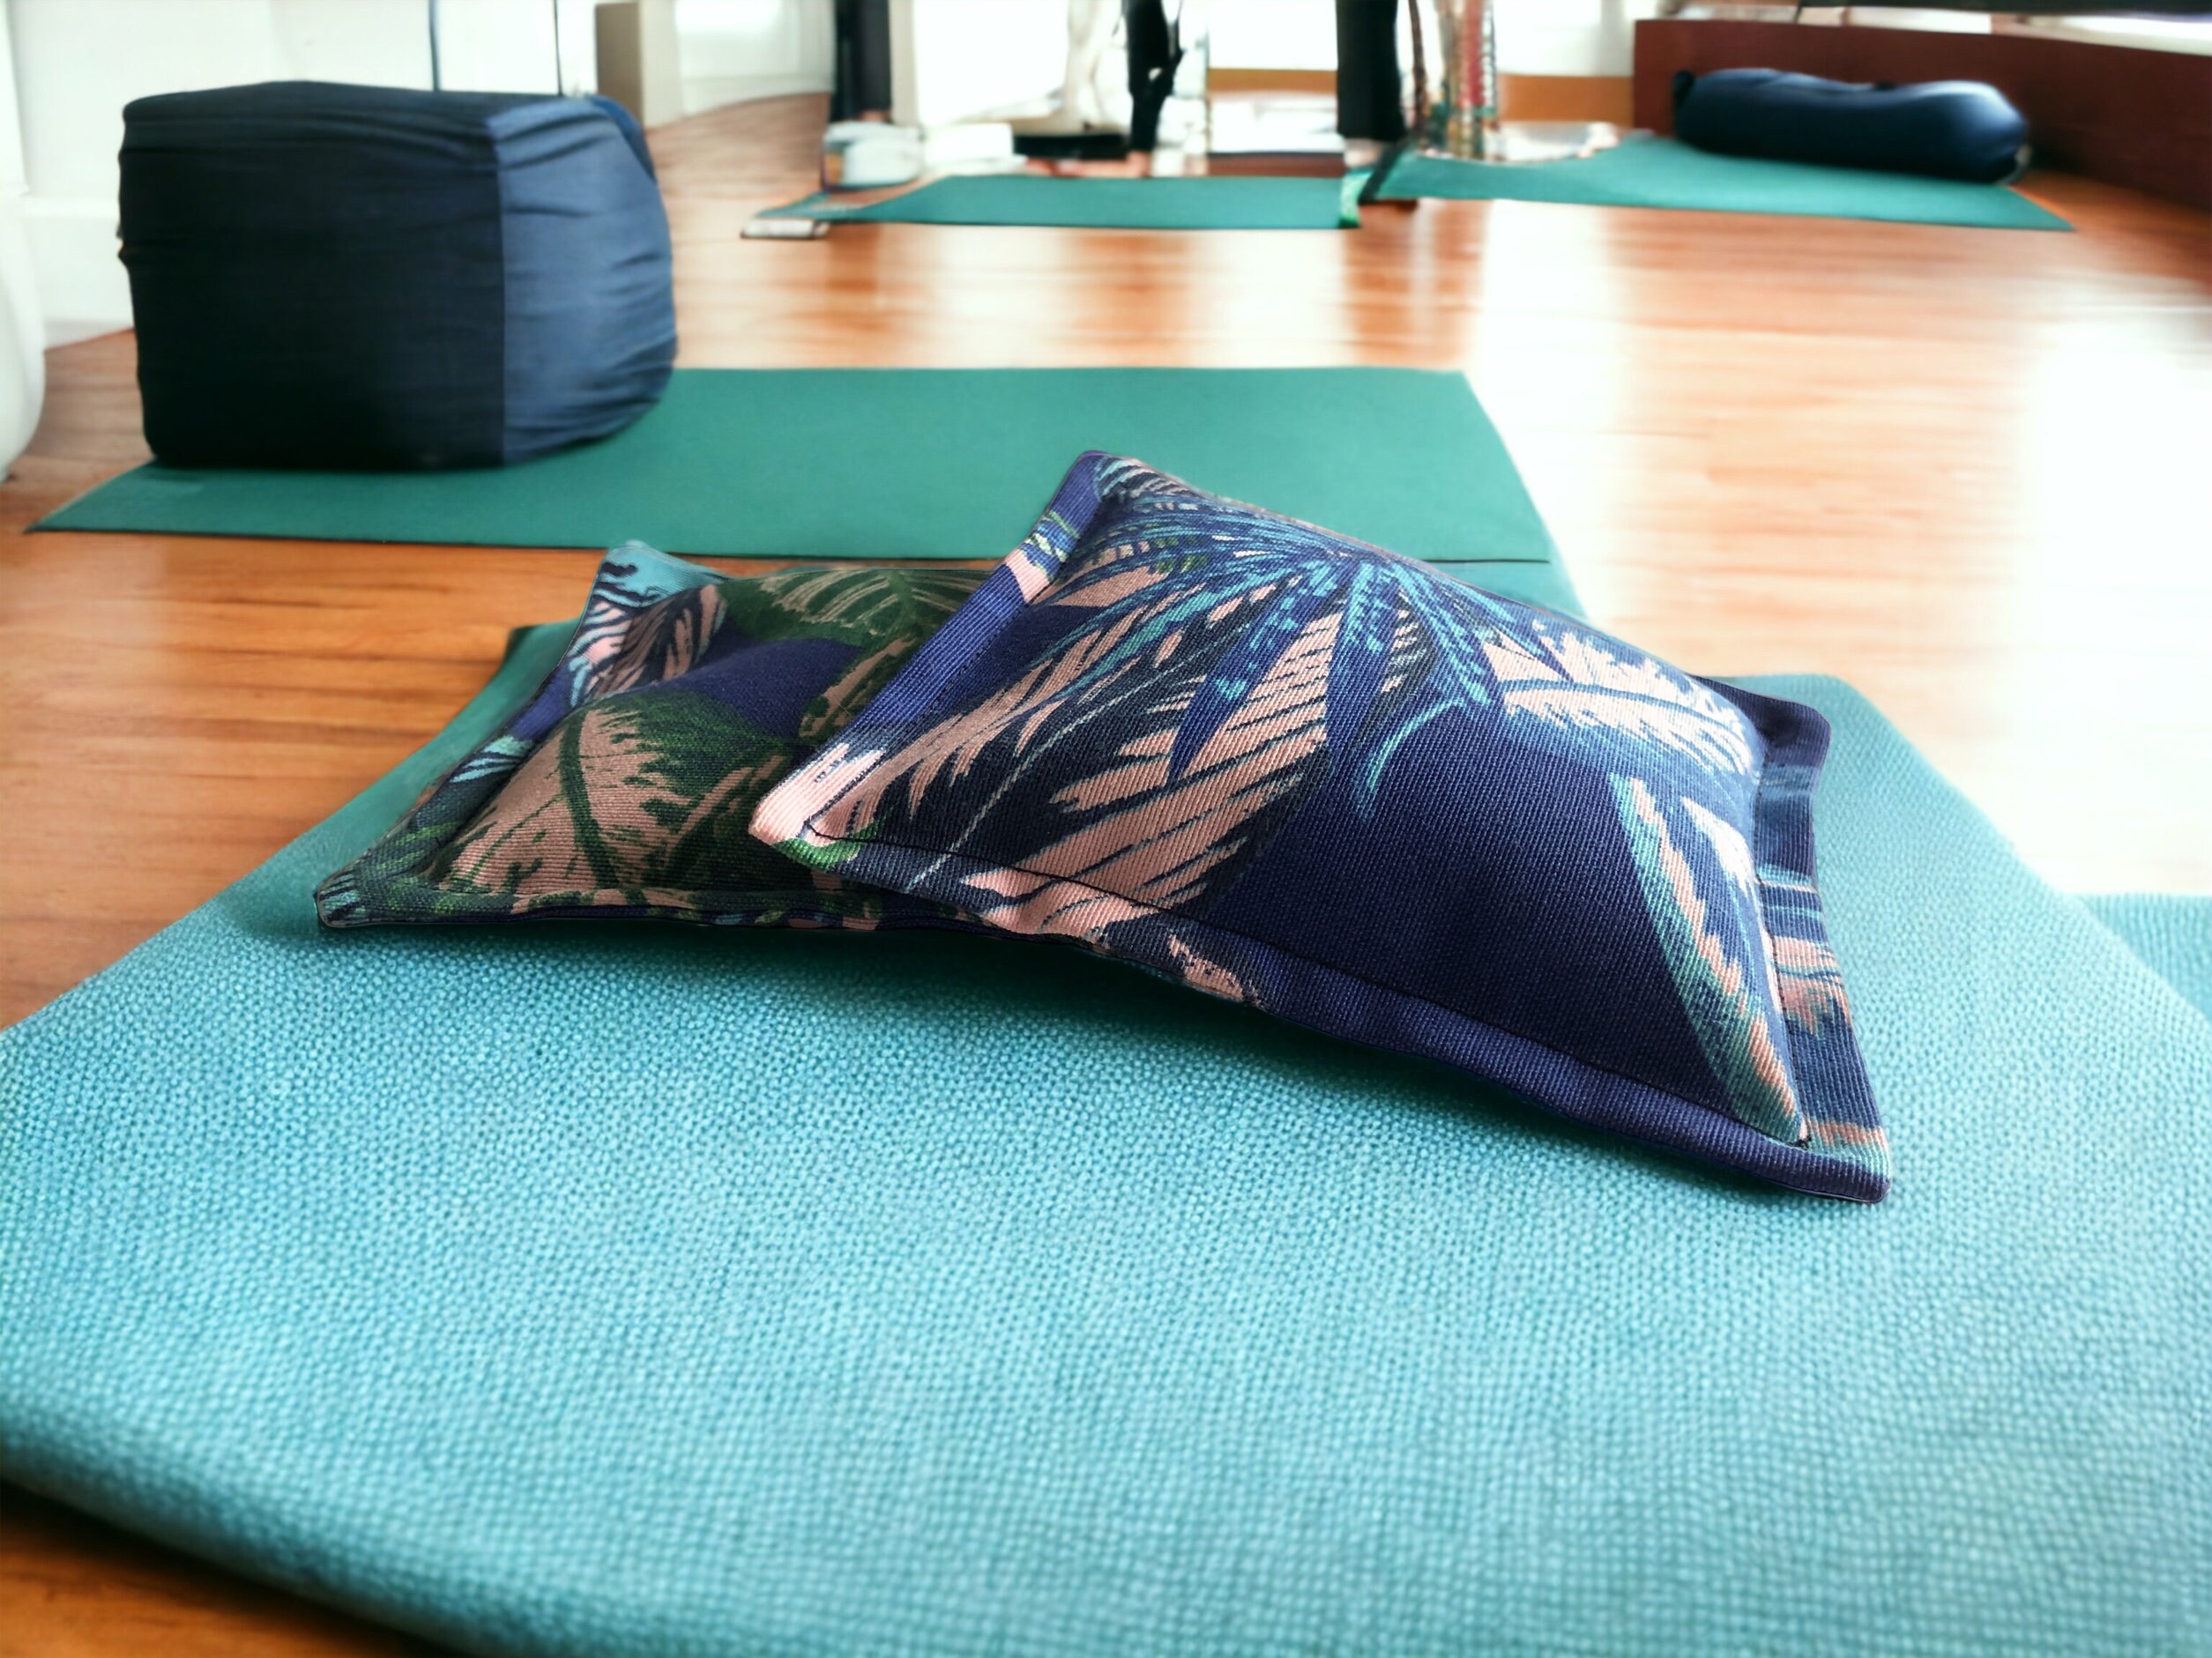  Kinesis Yoga Knee Pad Cushion - Extra Thick 1 inch